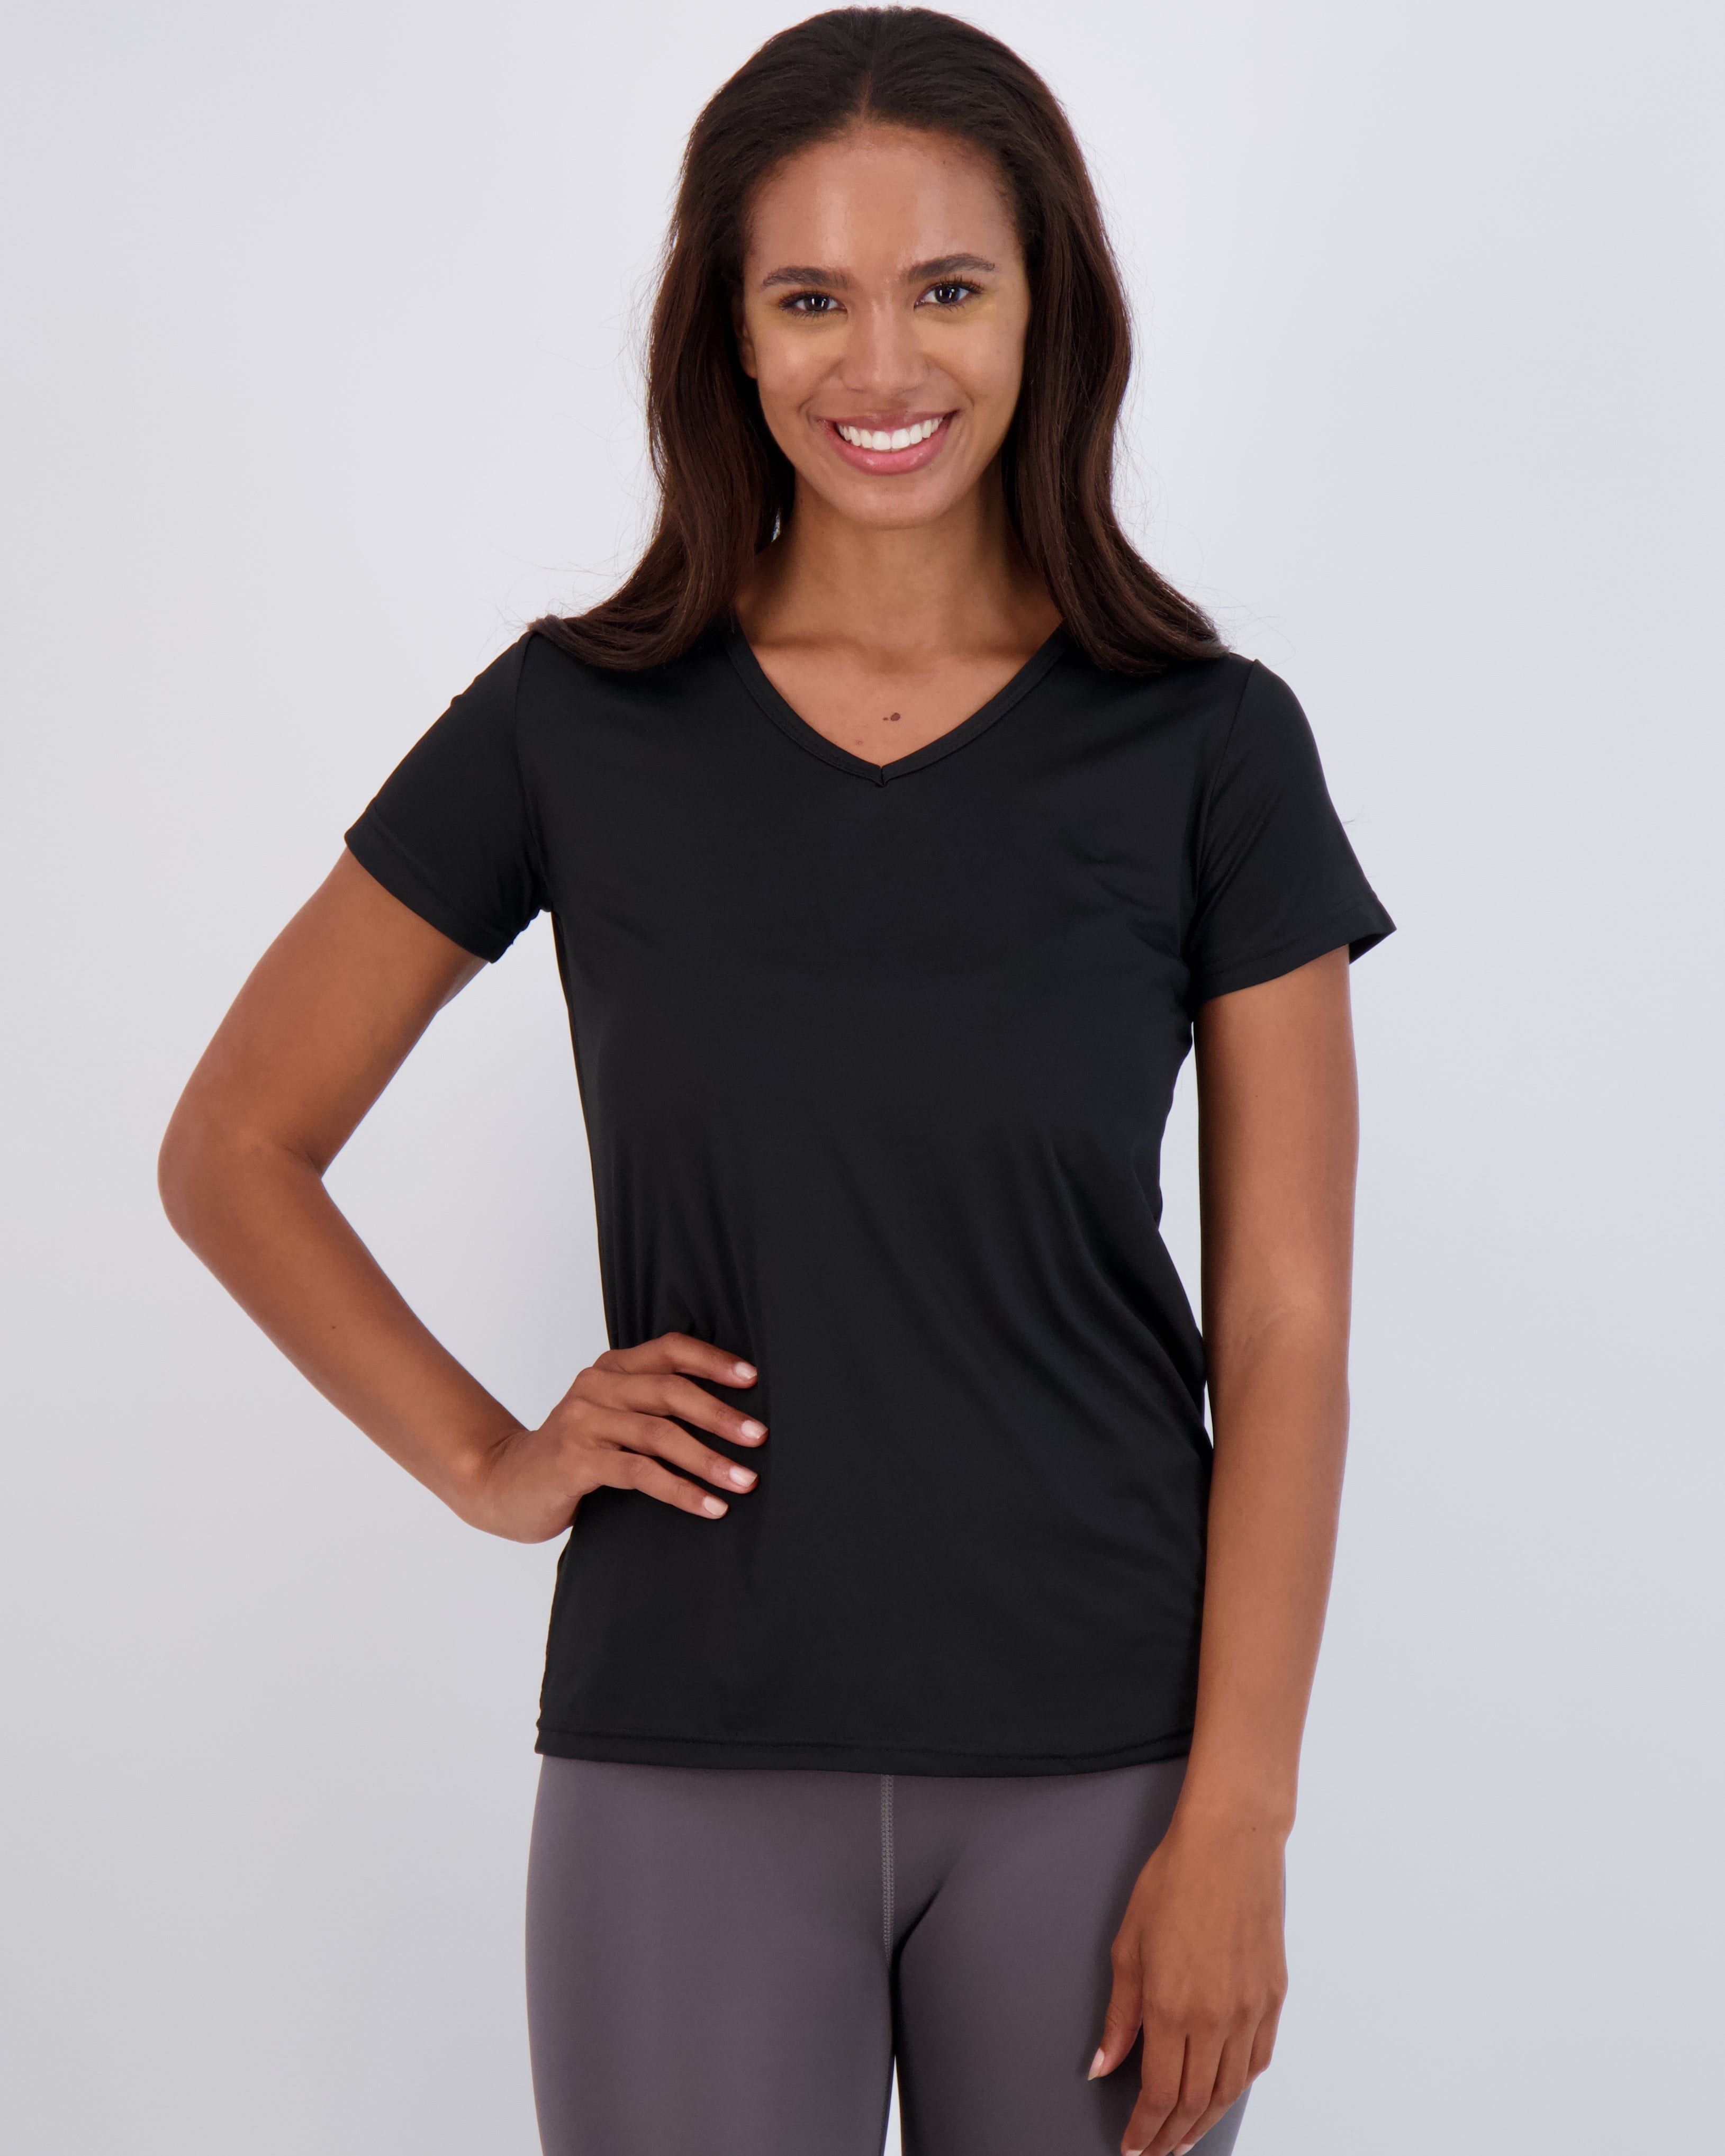 CY 4585 Plus Size Fitness Sports T-shirt Women Short Sleeve